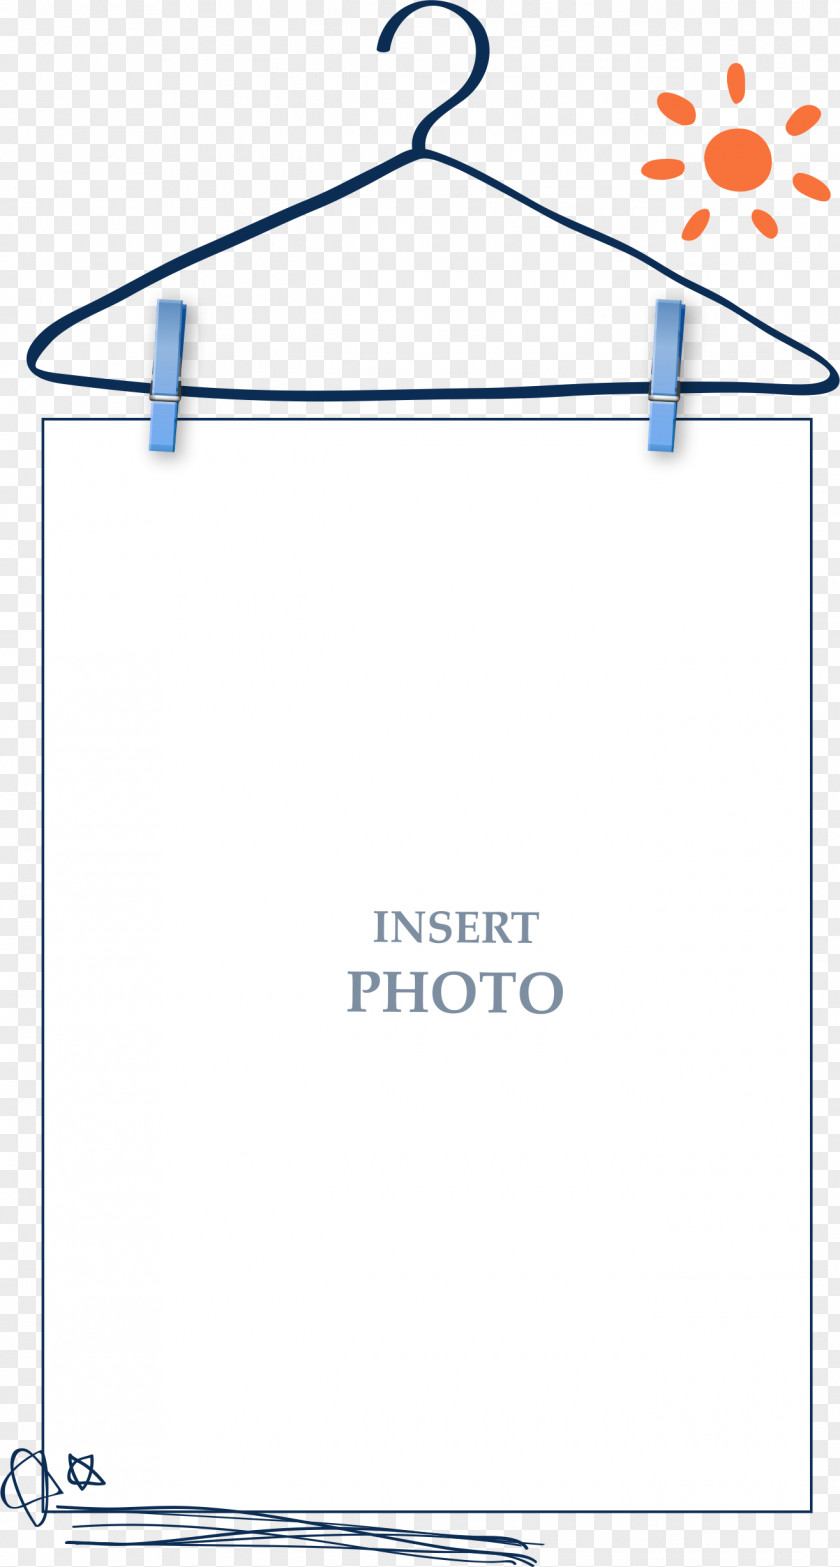 Blue Simple Coat Hanger Border Texture PNG simple coat hanger border texture clipart PNG